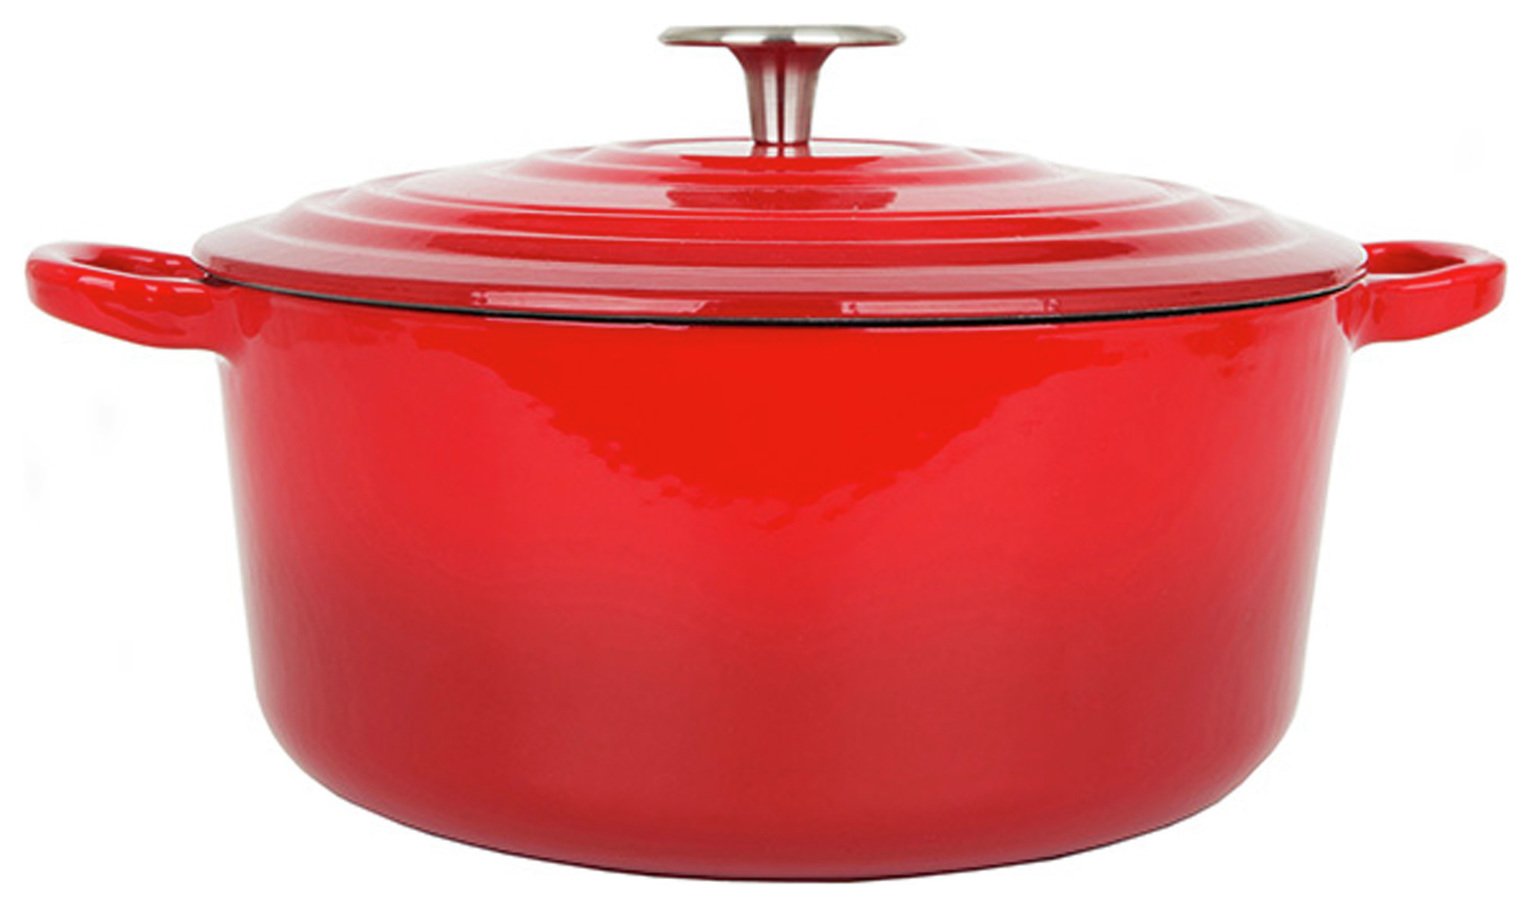 Sainsbury's Home 5.3 Litre Cast Iron Casserole Dish - Red